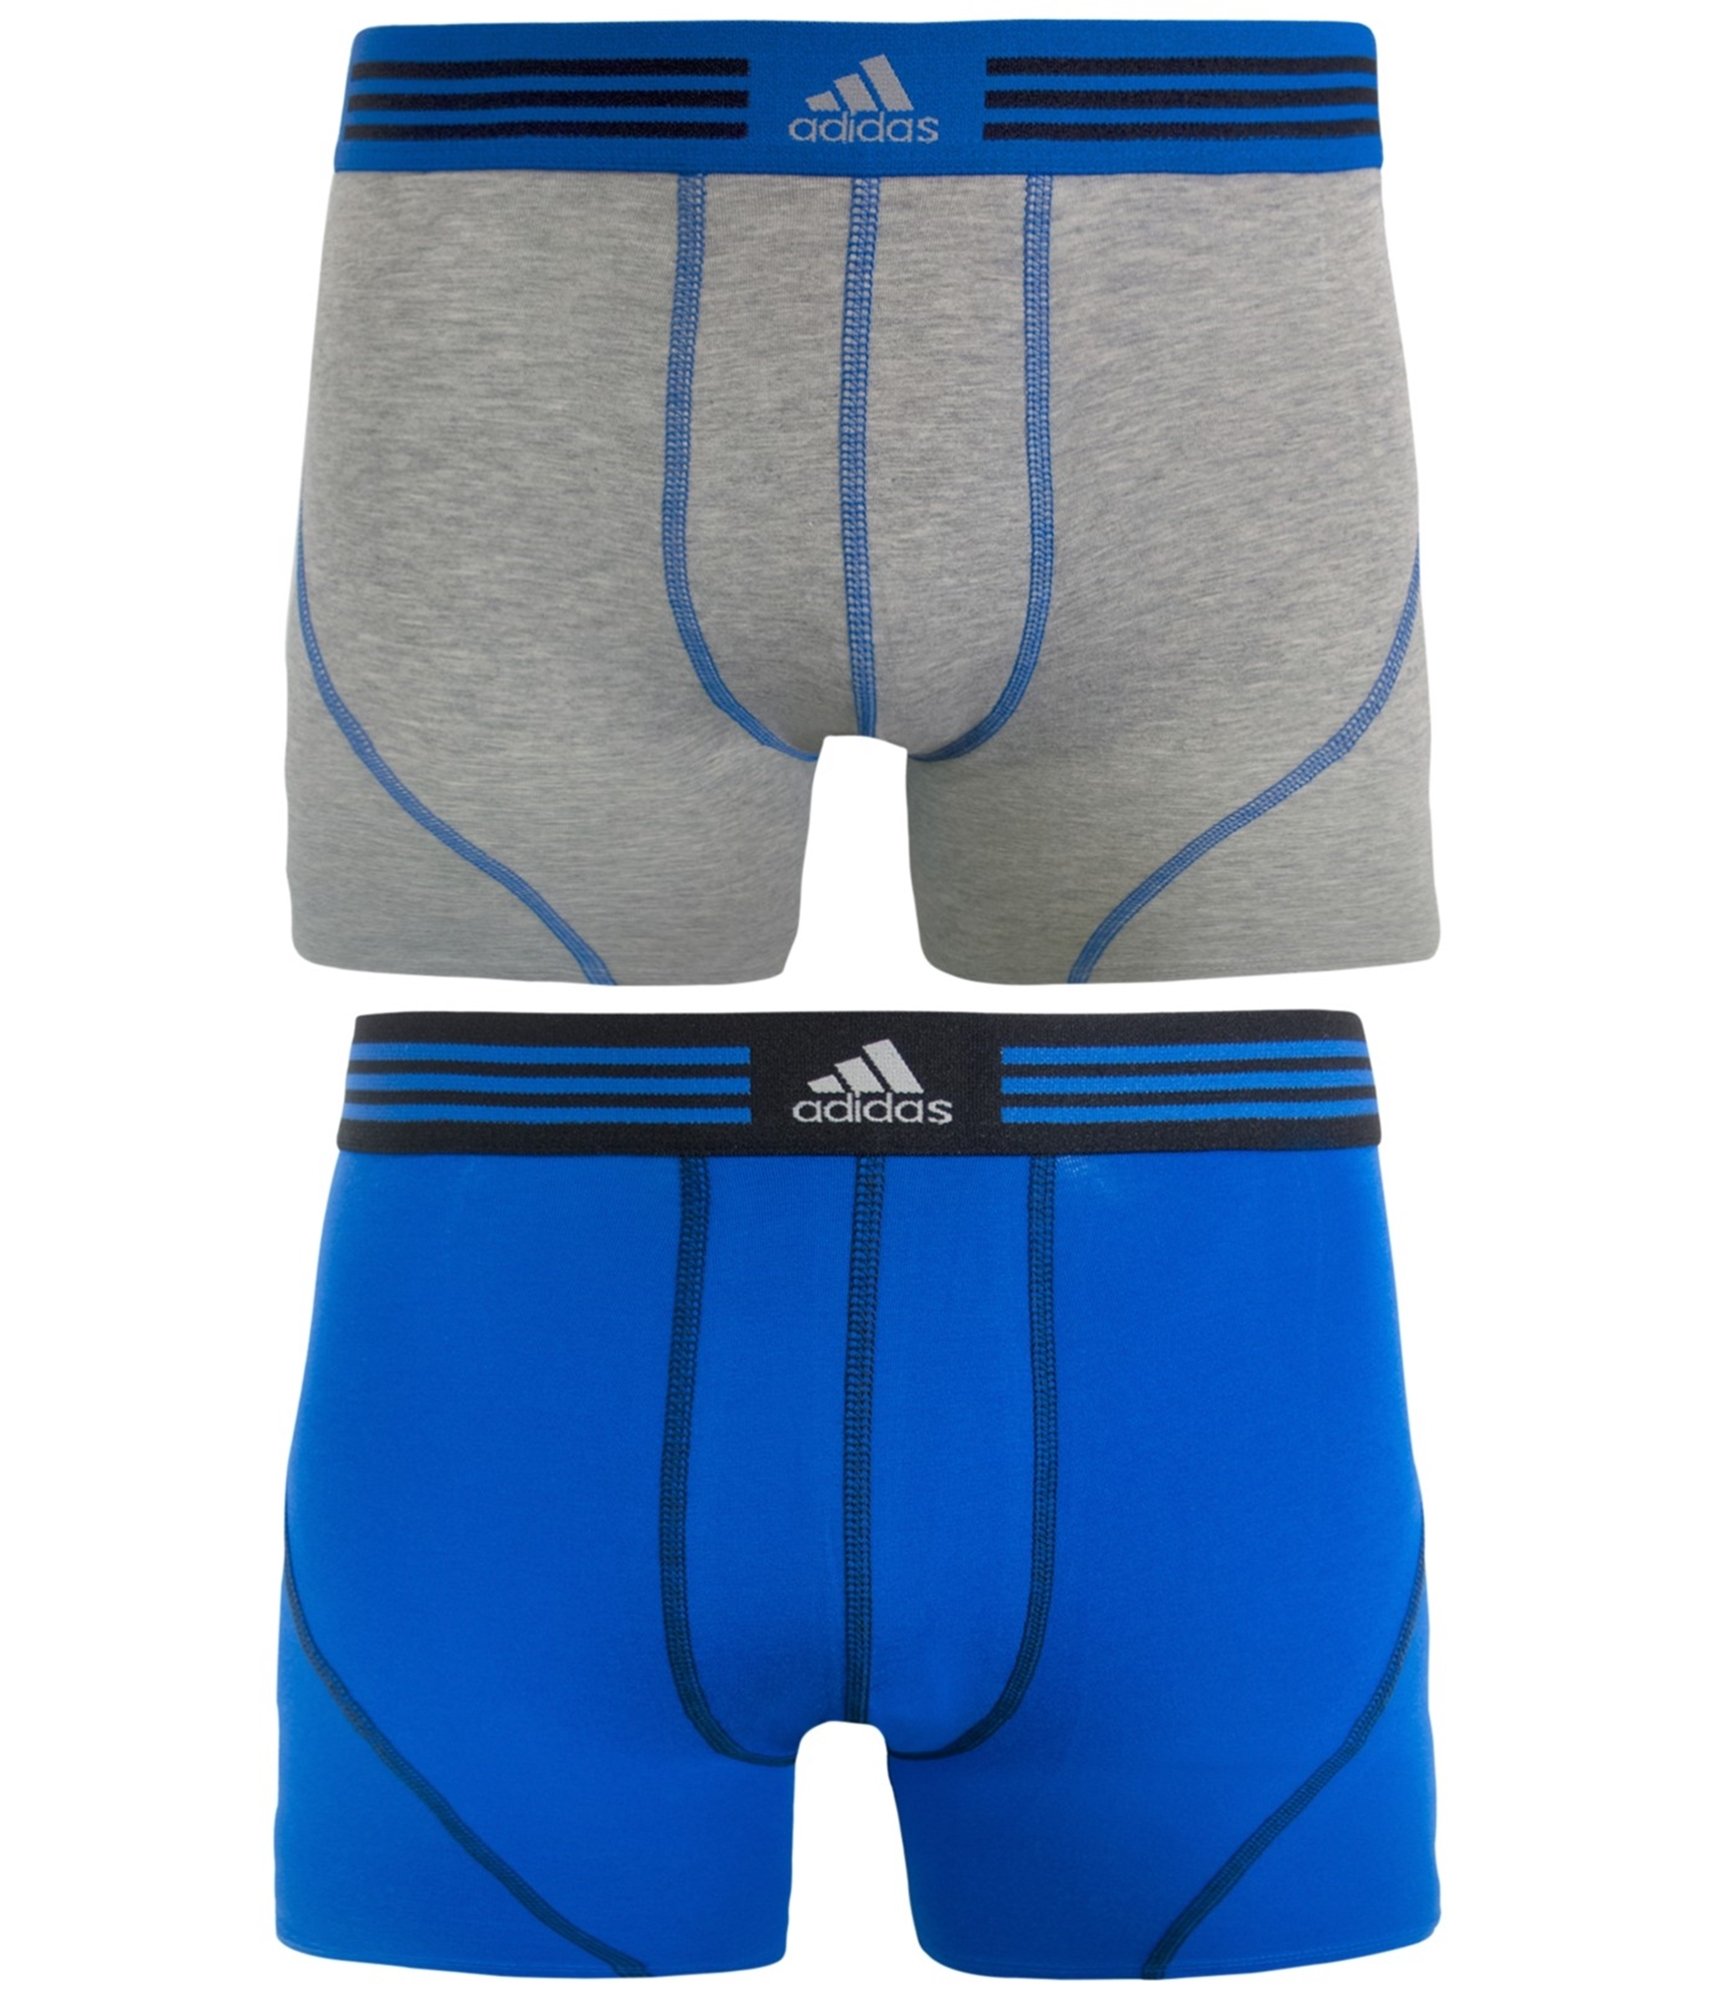 speelgoed Nietje Optimaal Buy a Mens Adidas Athletic Stretch Underwear Boxer Briefs Online |  TagsWeekly.com, TW2